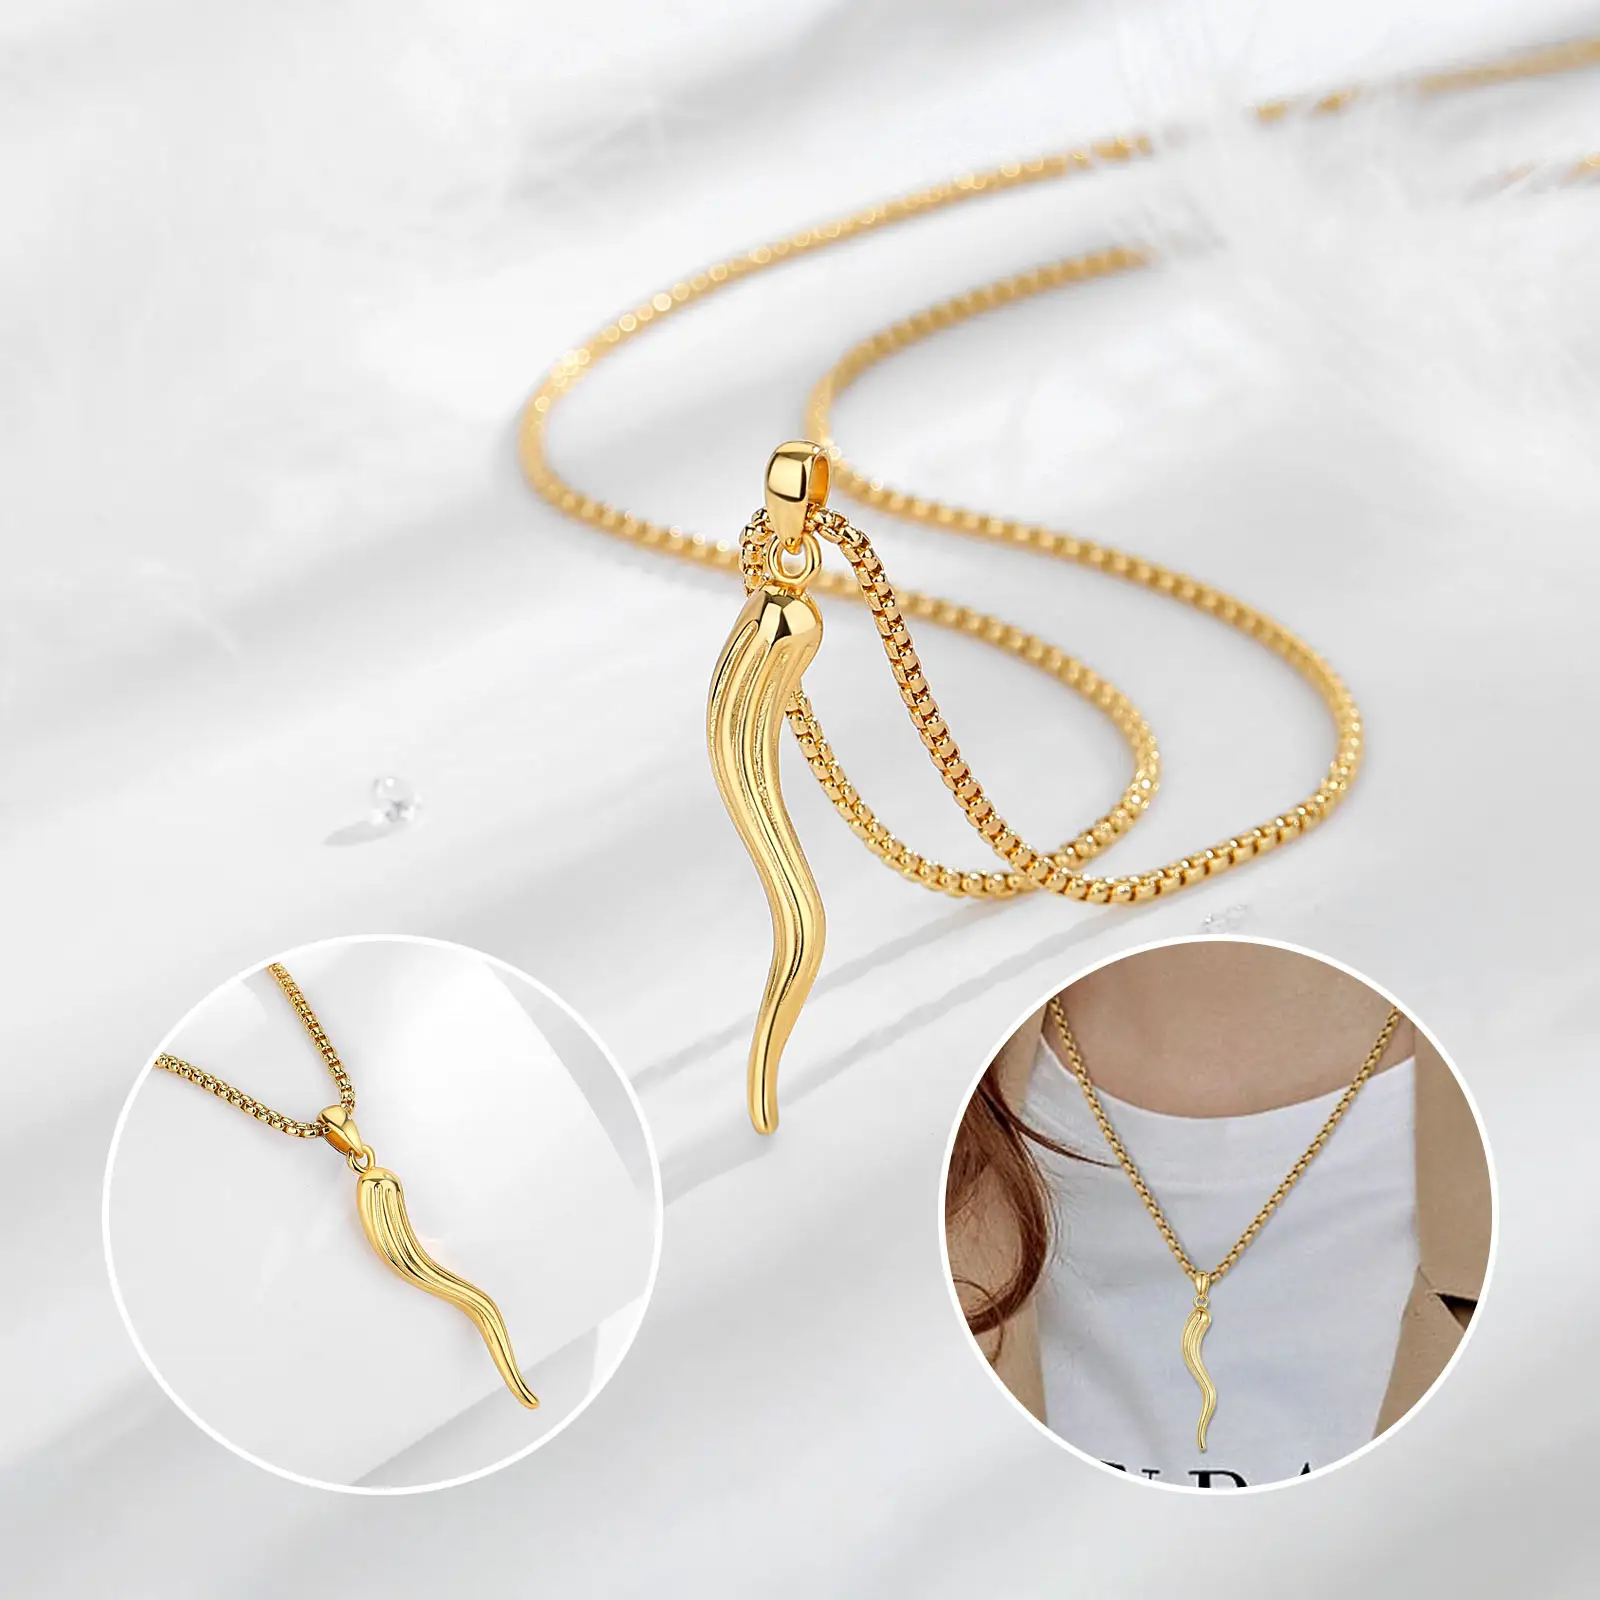 Changda Lucky Pendant Protection Amulet Jewelry Cornicello 18K Chapado en oro Buffalo Collar de cuerno italiano para mujer